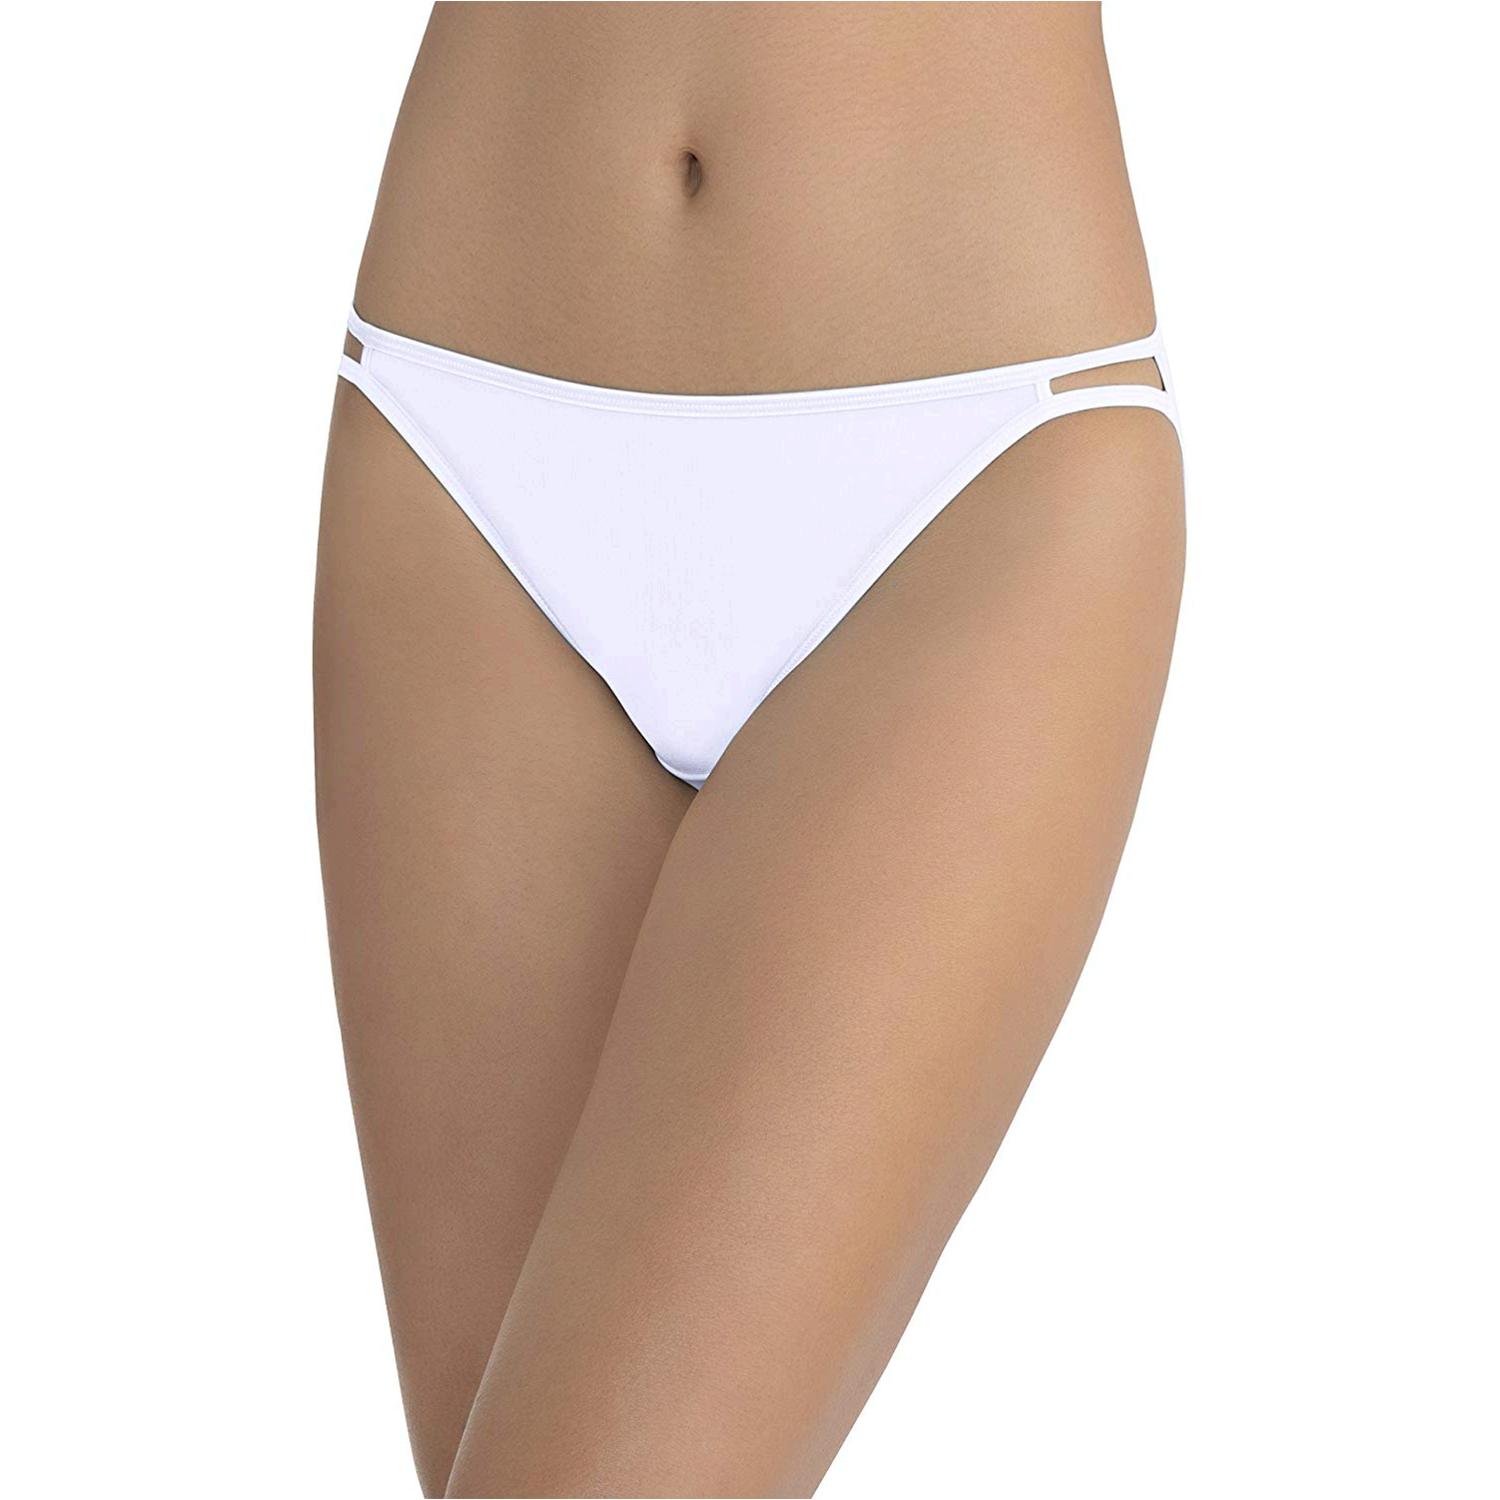 Vanity Fair Women's Illumination String Bikini Panty, Star White, Size 6.0 Jbr8 | eBay